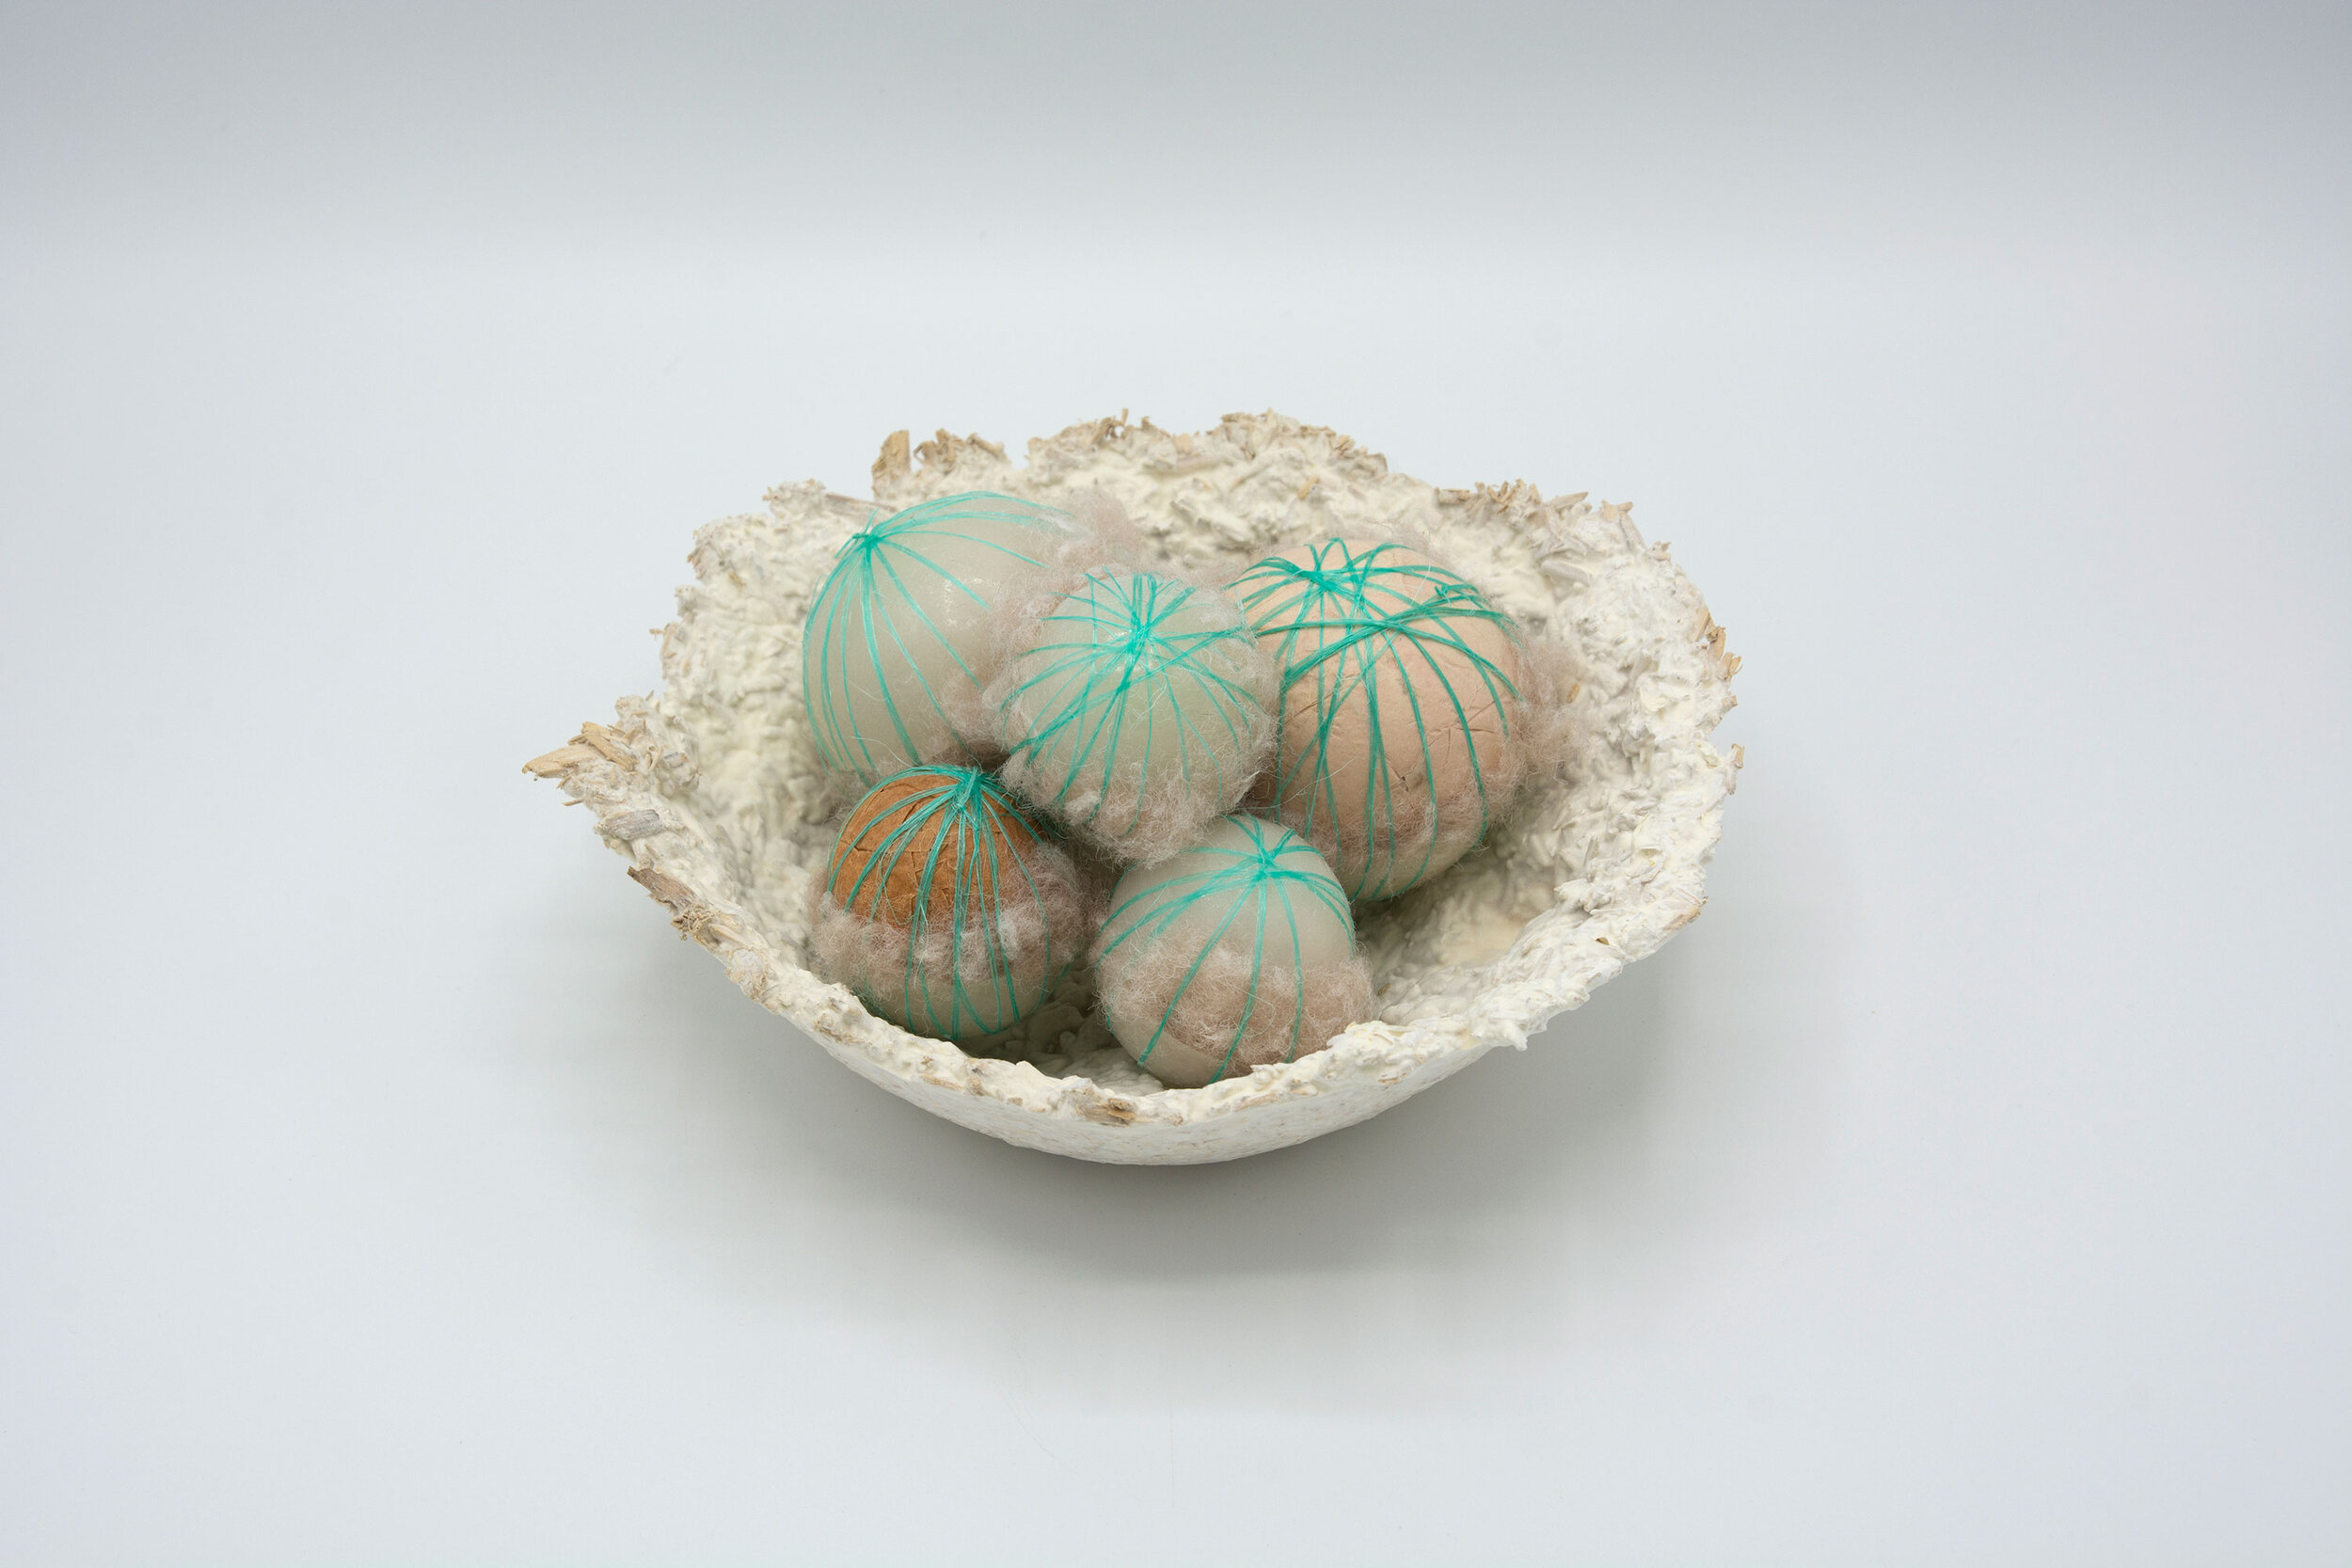  Kelly M O'Brien, One Meter Quadrat, with bowl. Mycelium, paper, wax, wool, bailing twine ©2021 